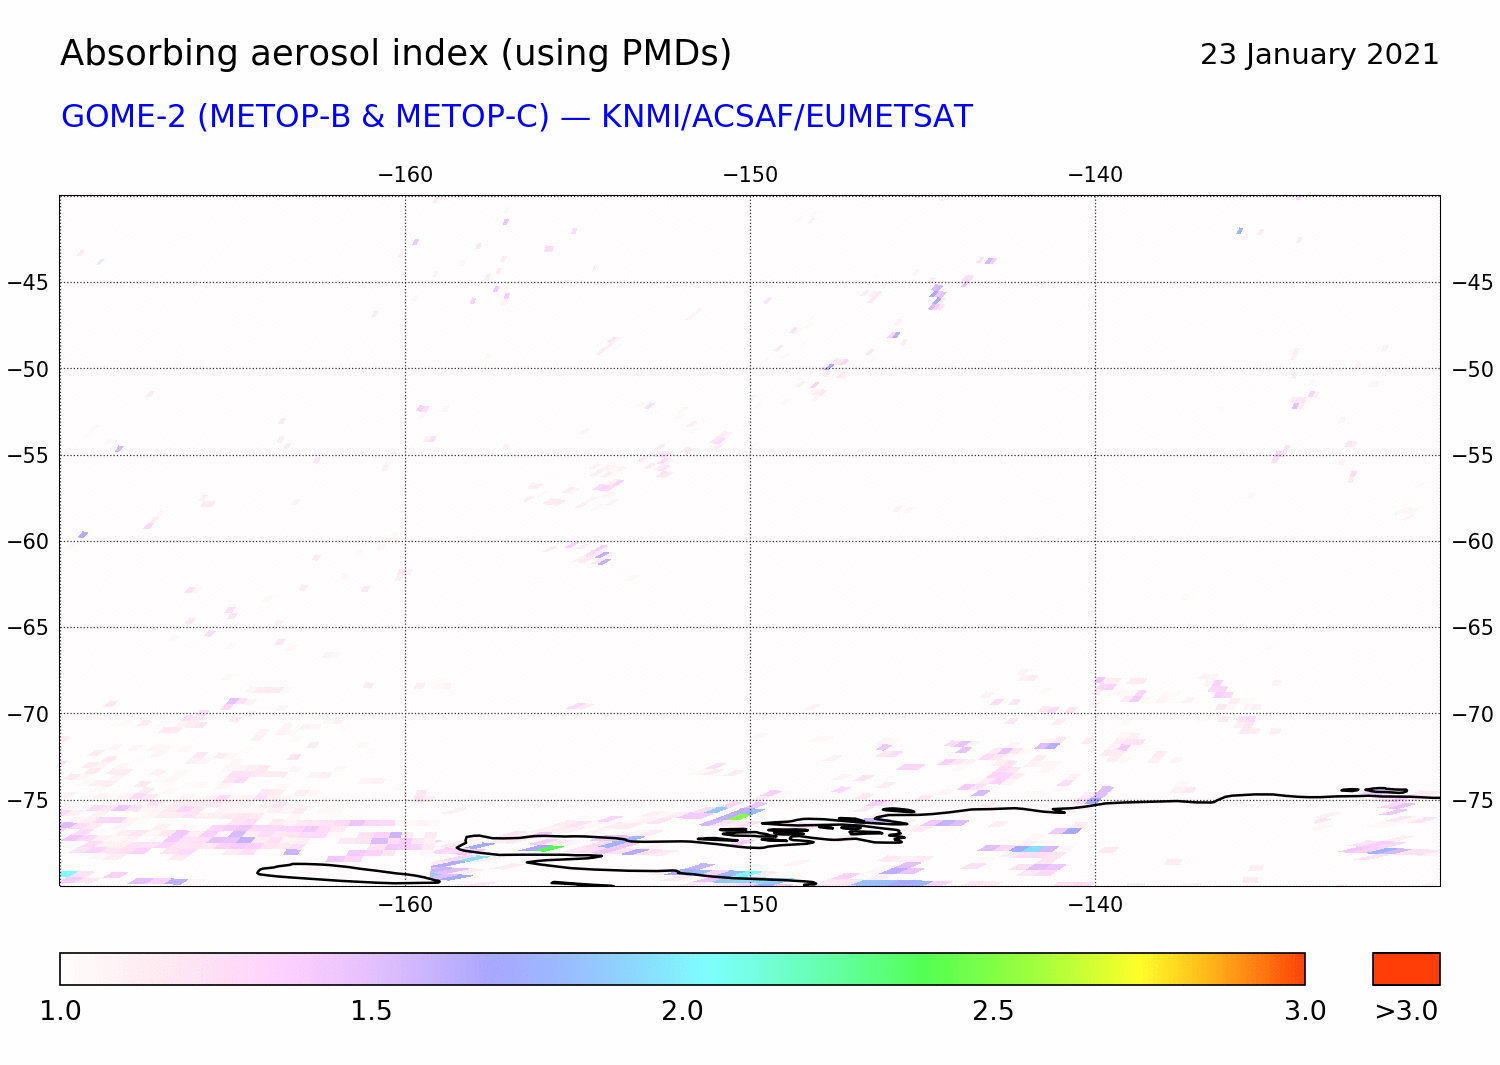 GOME-2 - Absorbing aerosol index of 23 January 2021